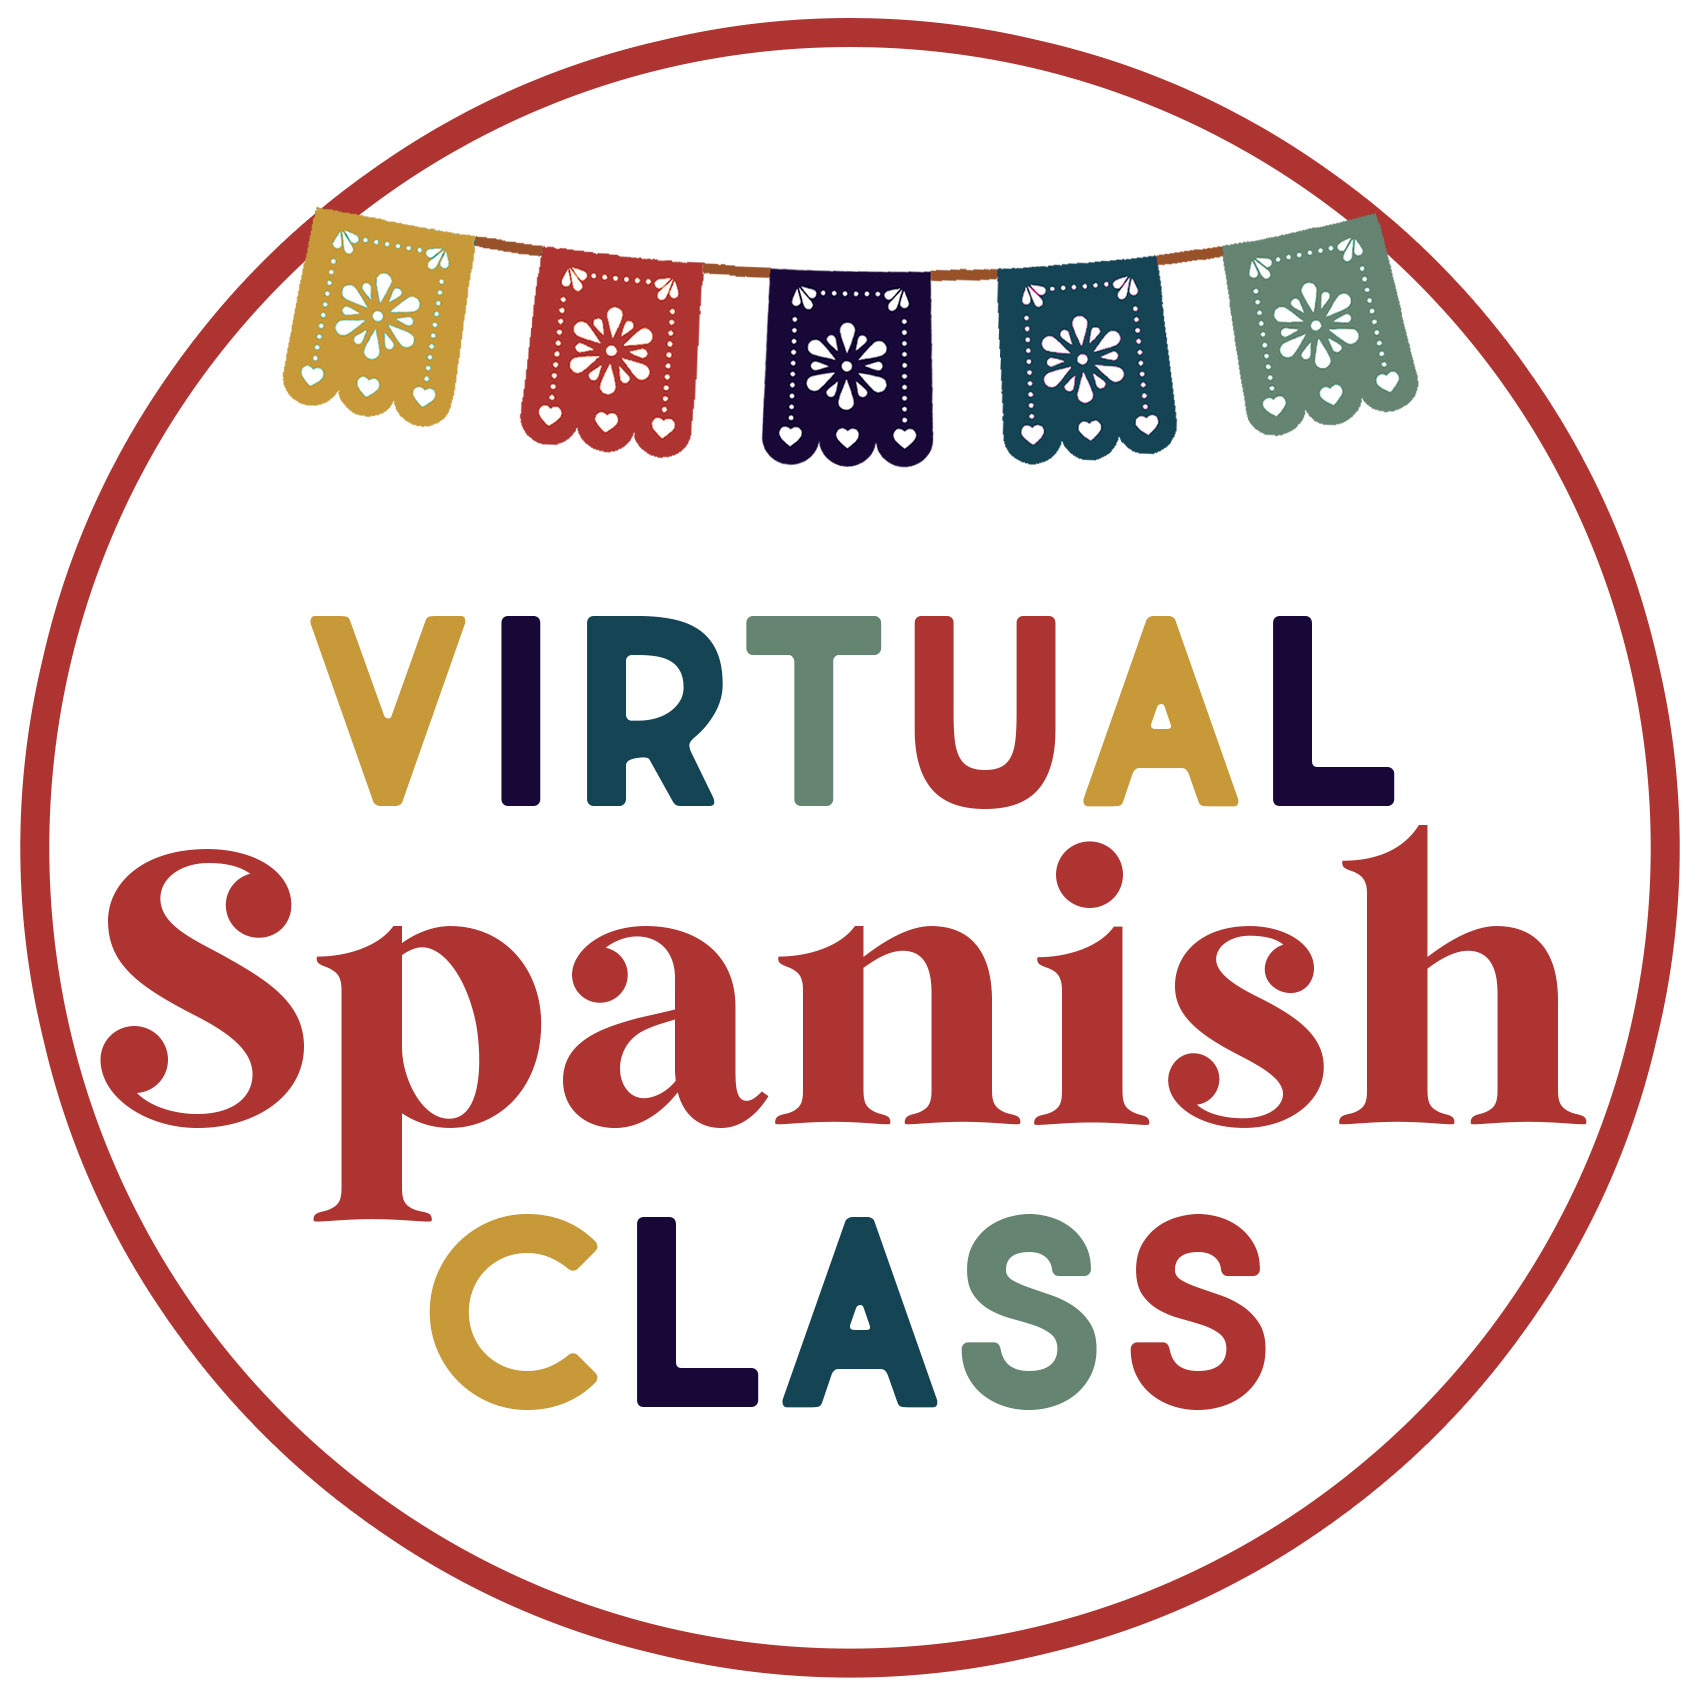 Virtual Spanish Class